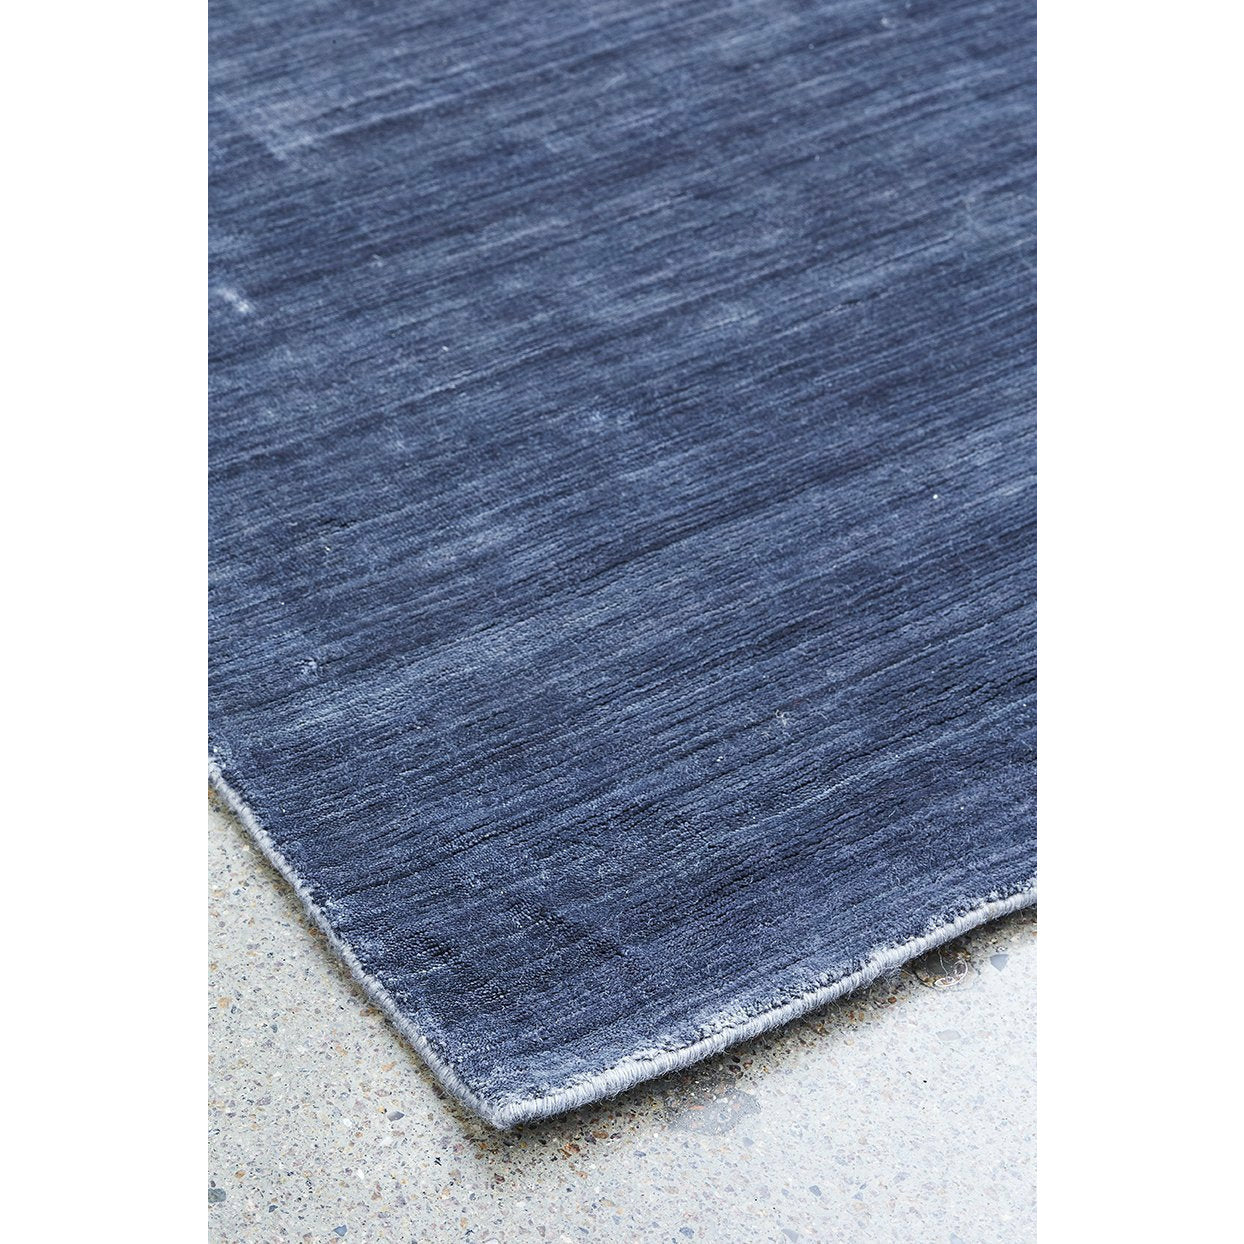 Massimo Bambu mattan stål svart, 200x300 cm